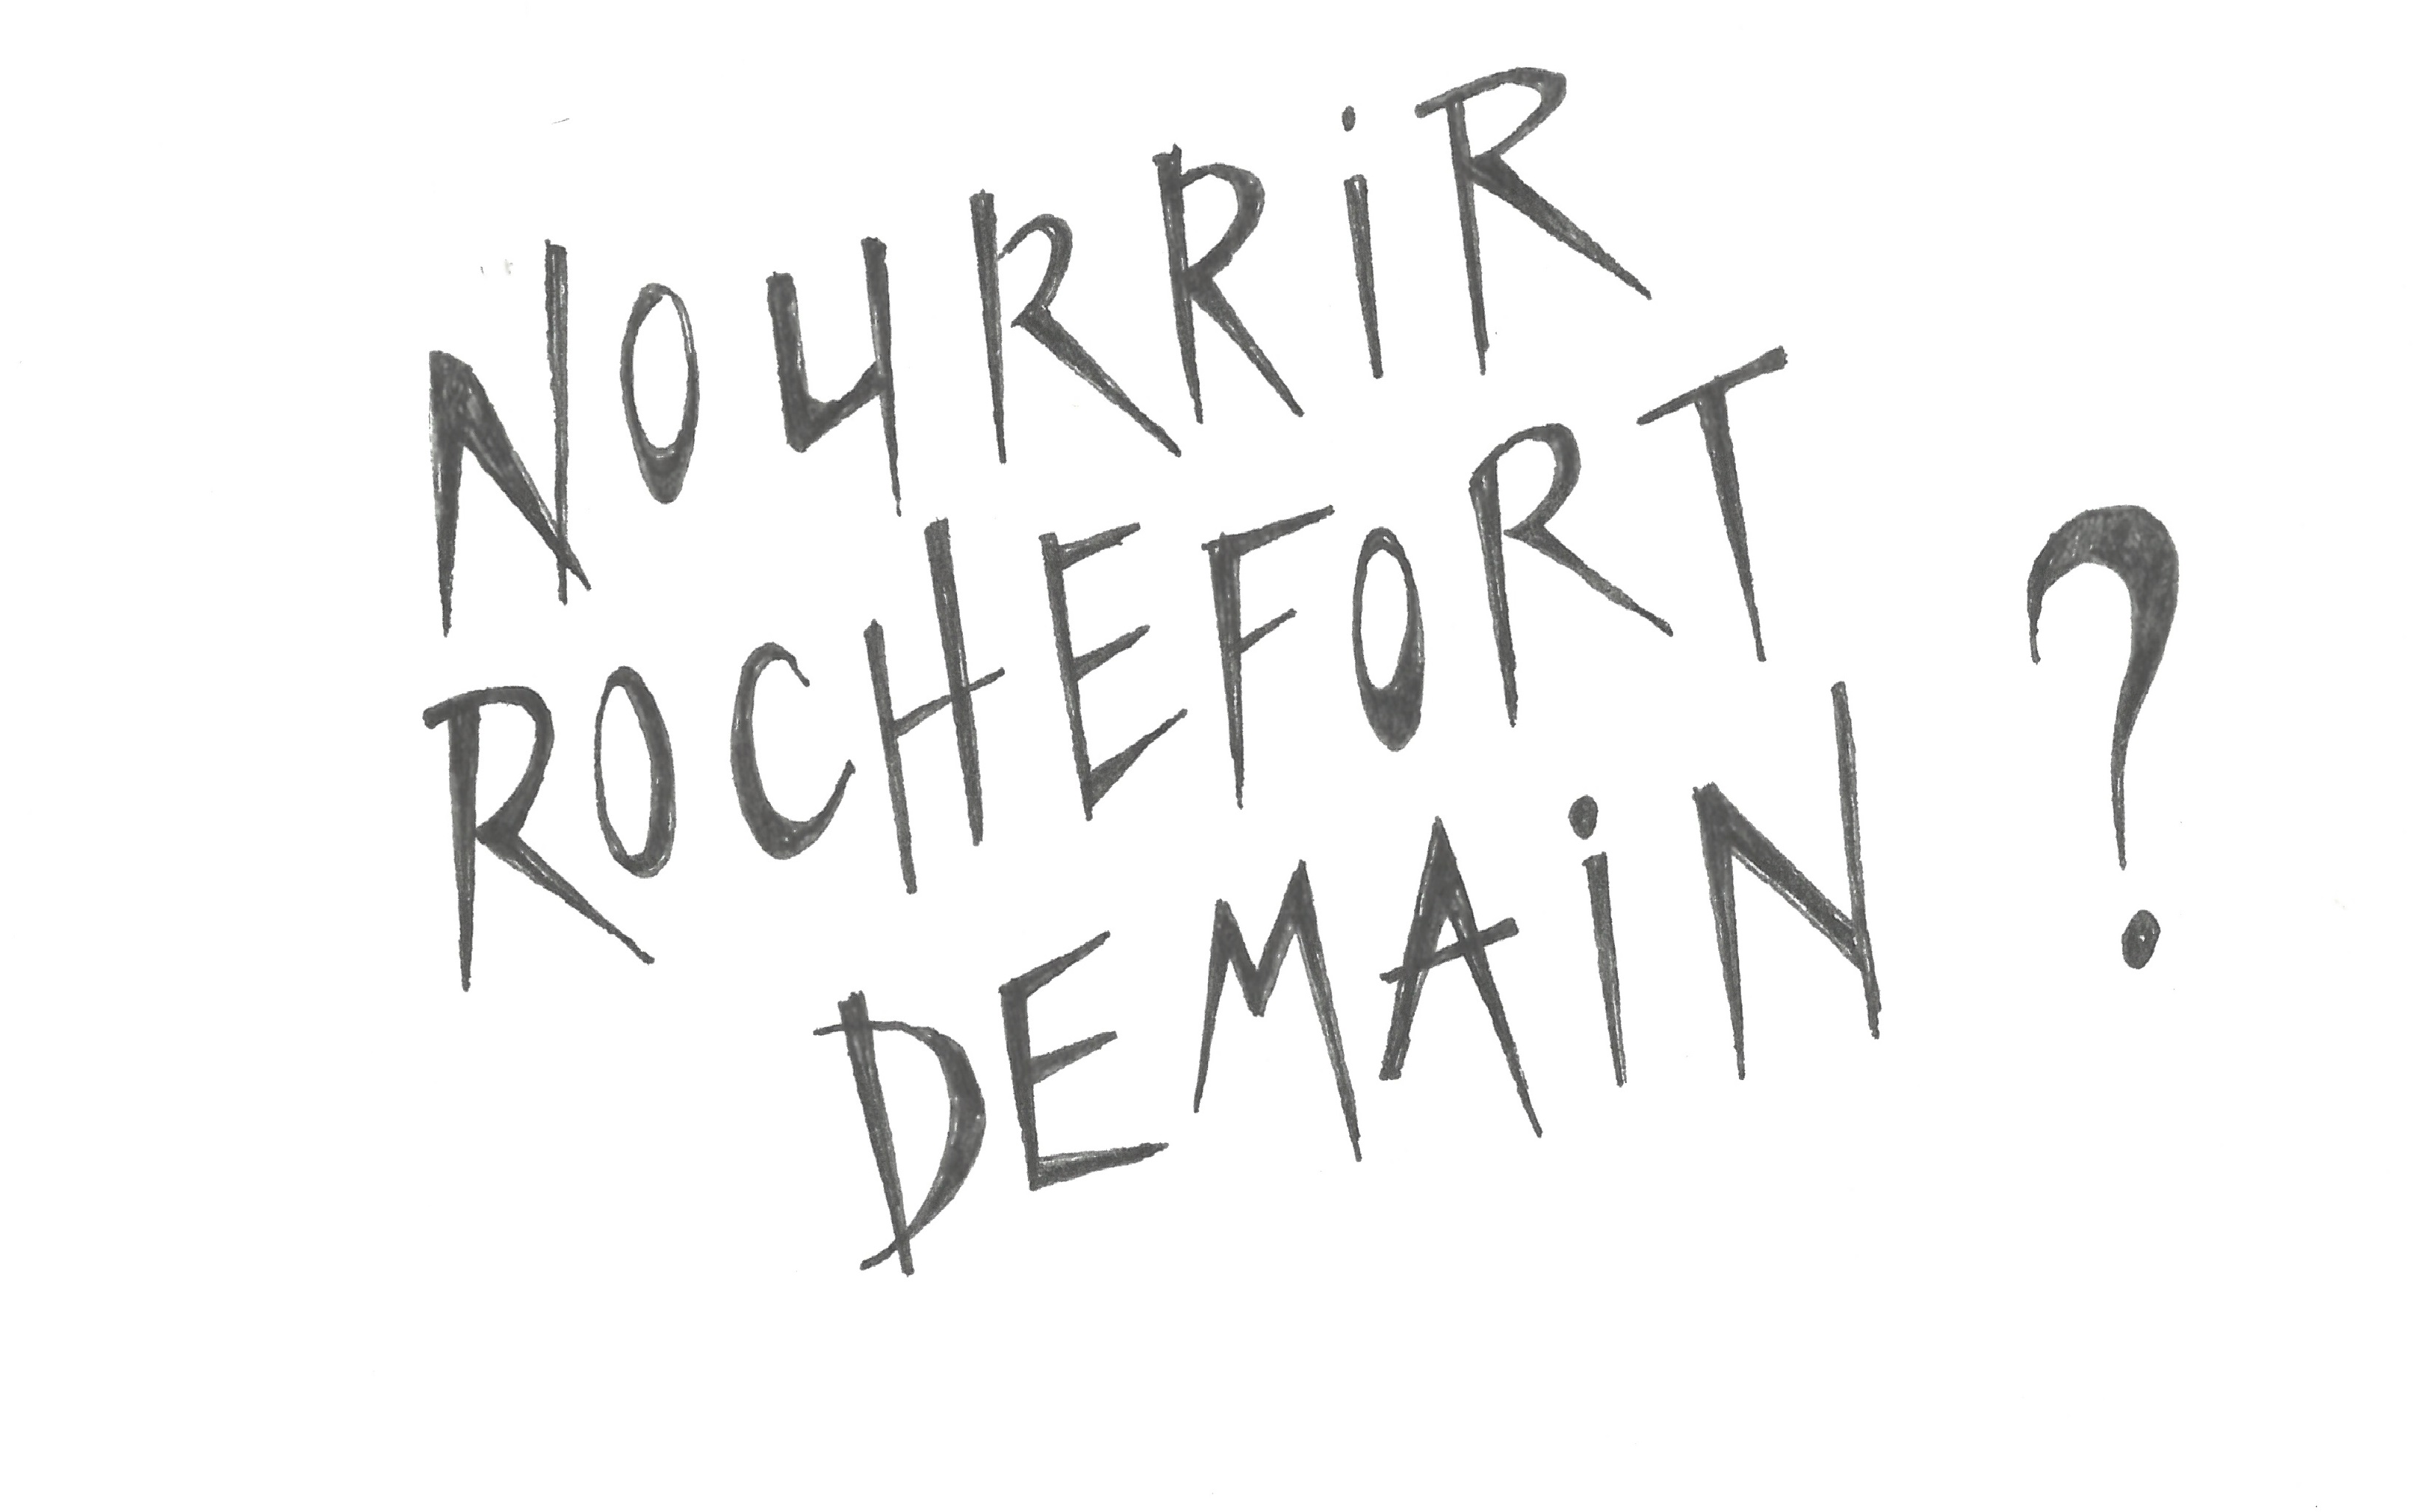 image nourrir_rochefort_texte_31.jpg (0.4MB)
Lien vers: https://rochefortentransition.org/?NourriR